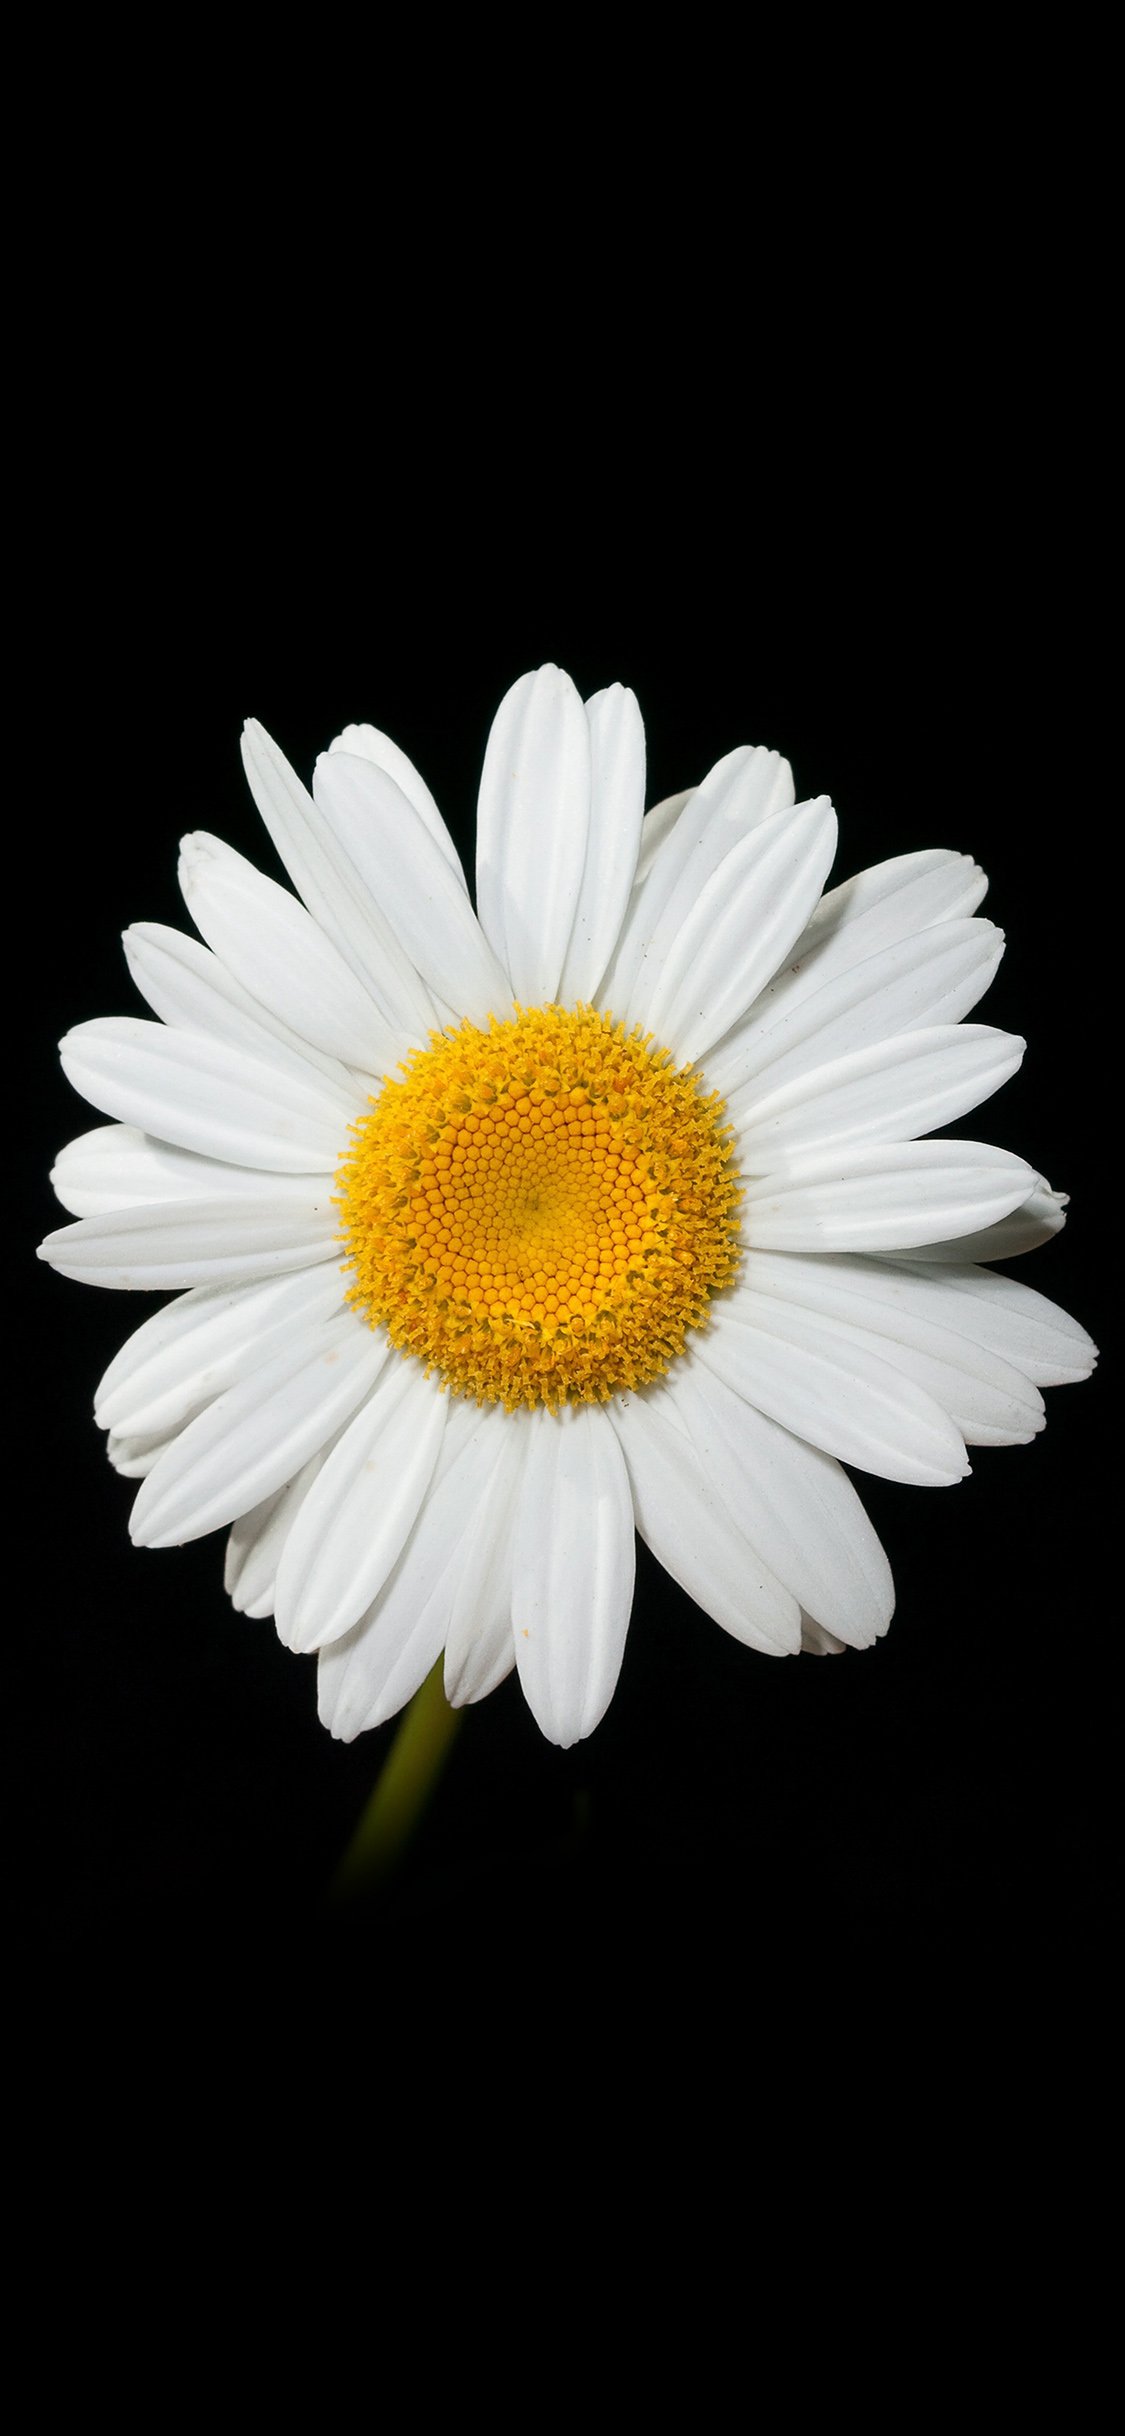 iPhone X wallpaper. daisy flower dark nature